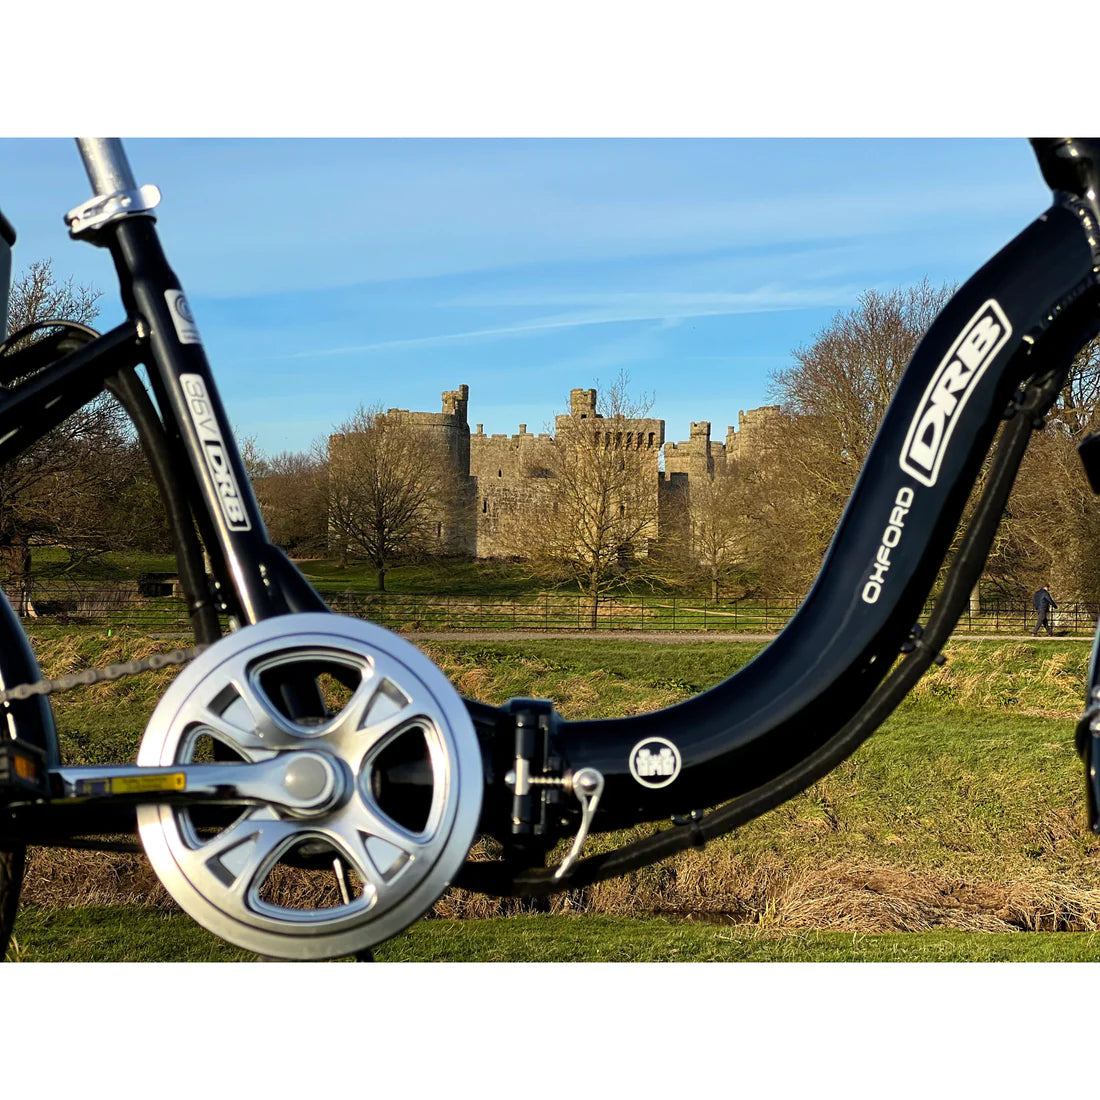 Dallingridge Oxford Folding City Electric Bike - Gloss Black